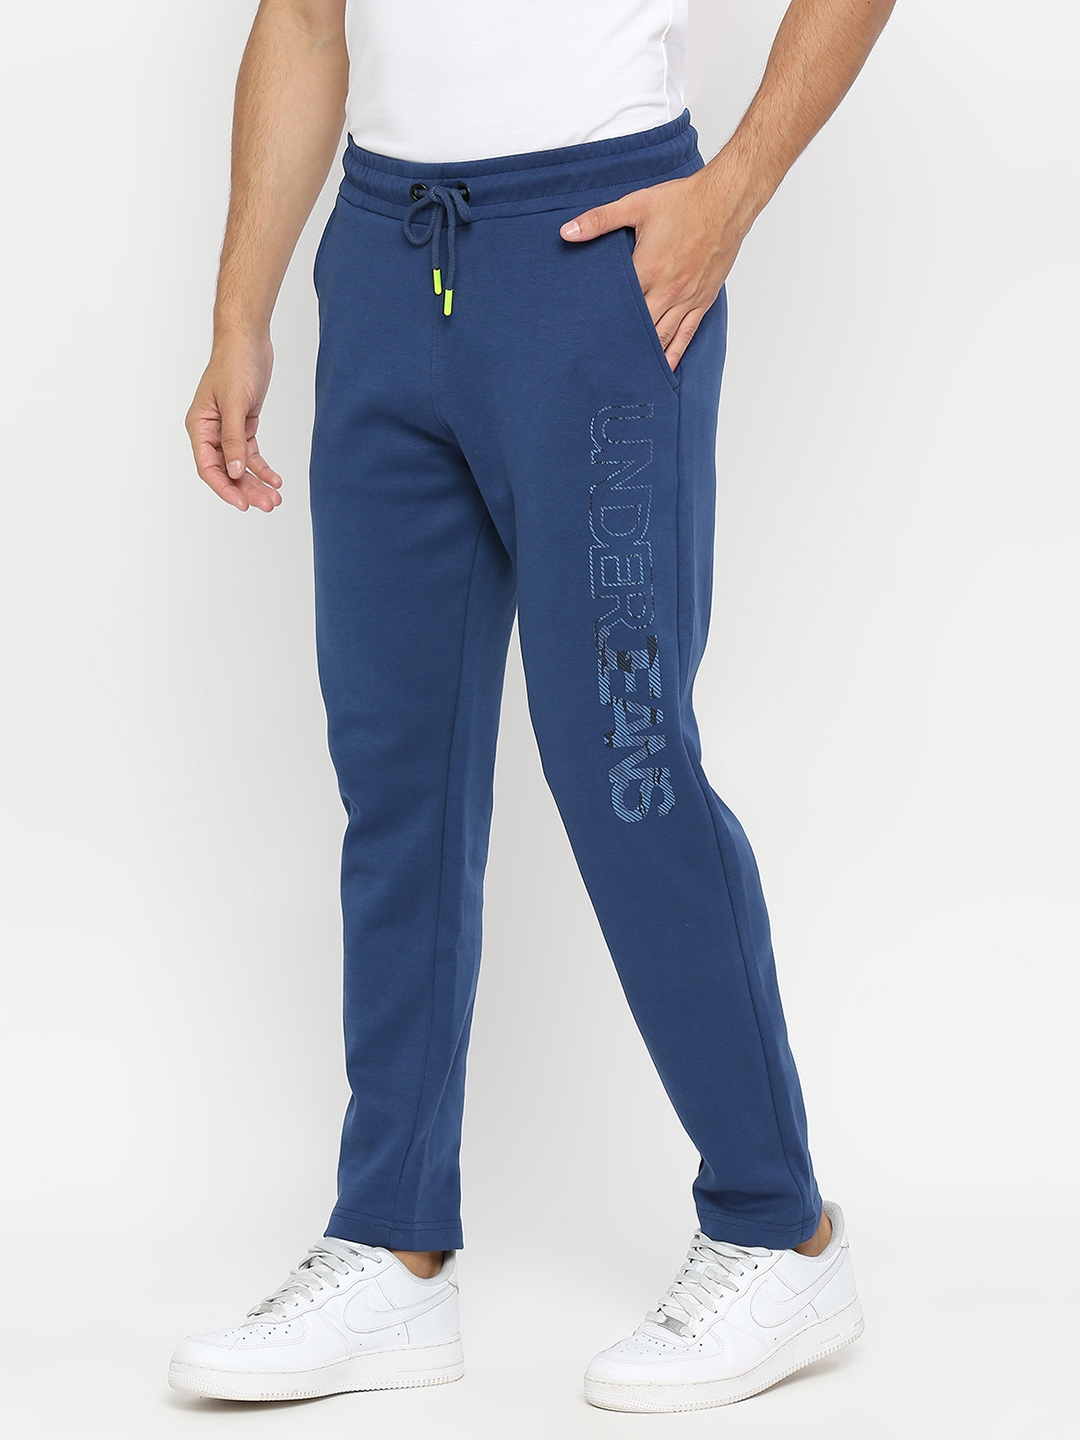 Underjeans by Spykar Men Knitted Indigo Blue Cotton Pyjama